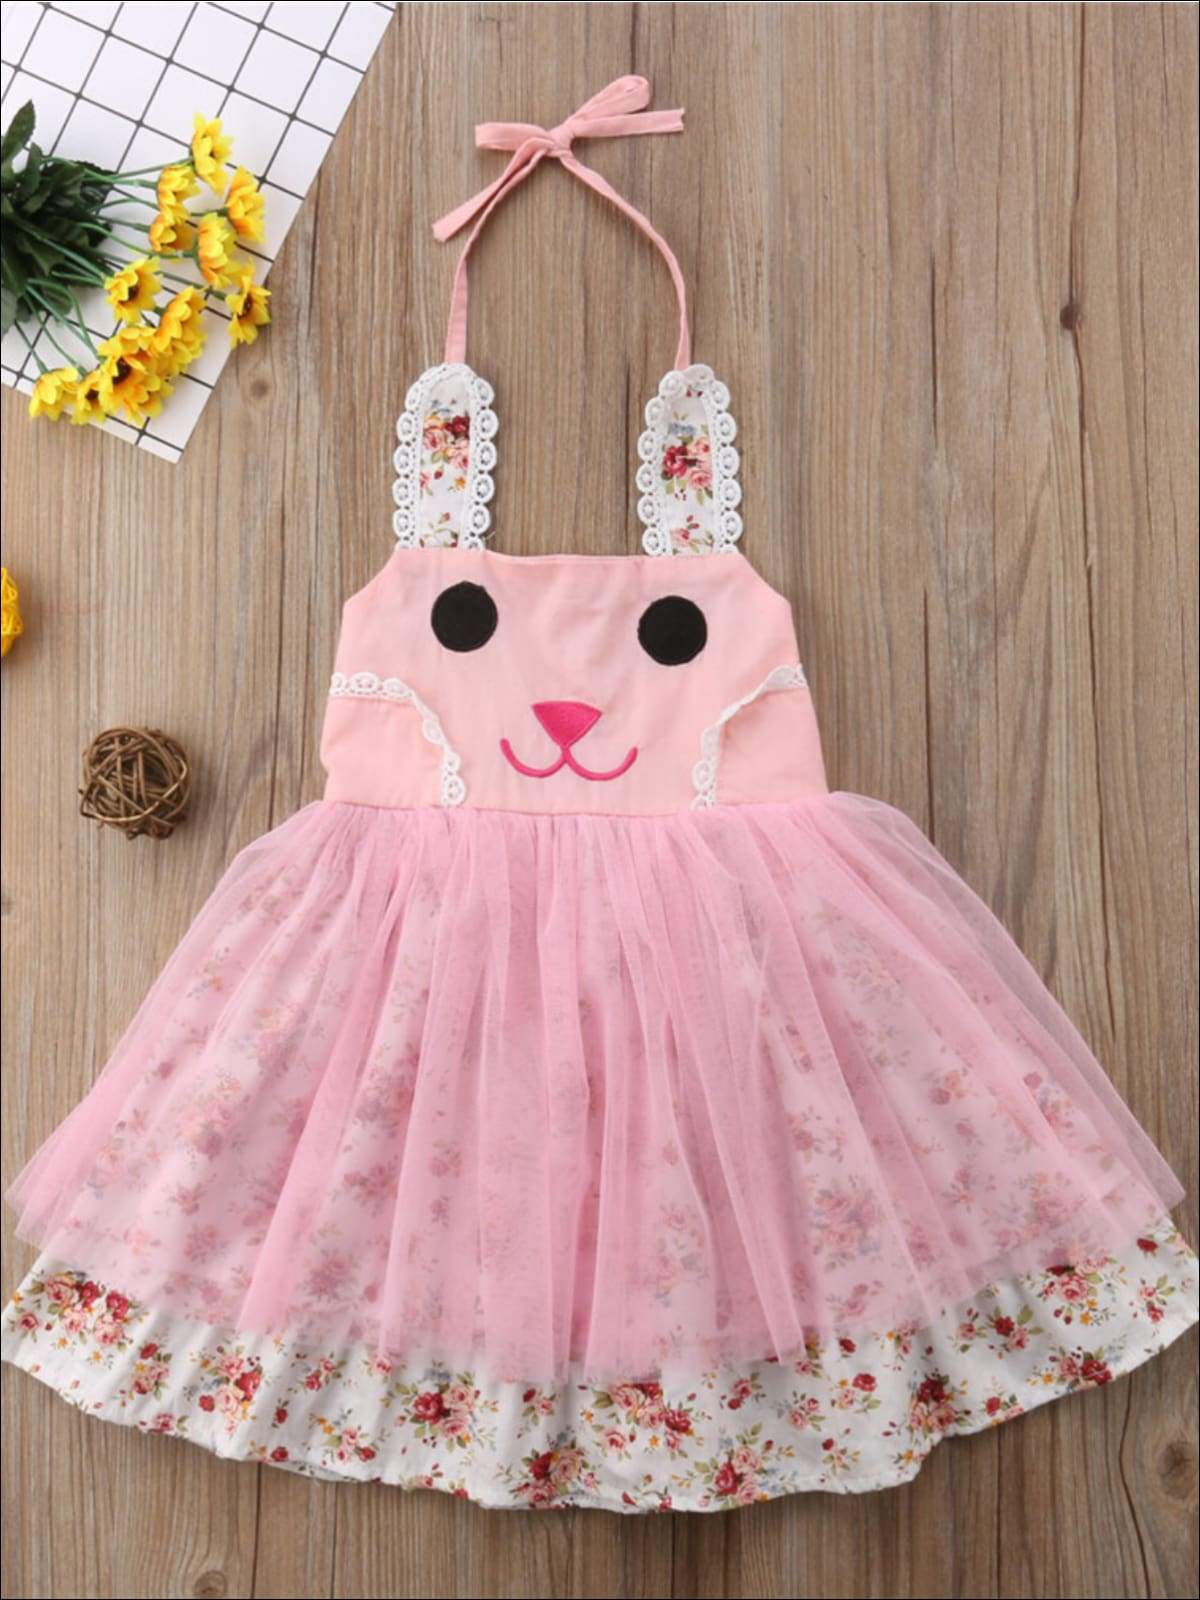 Girls Bunny Floral Tulle Tutu Dress - Pink / 4T - Girls Spring Dressy Dress